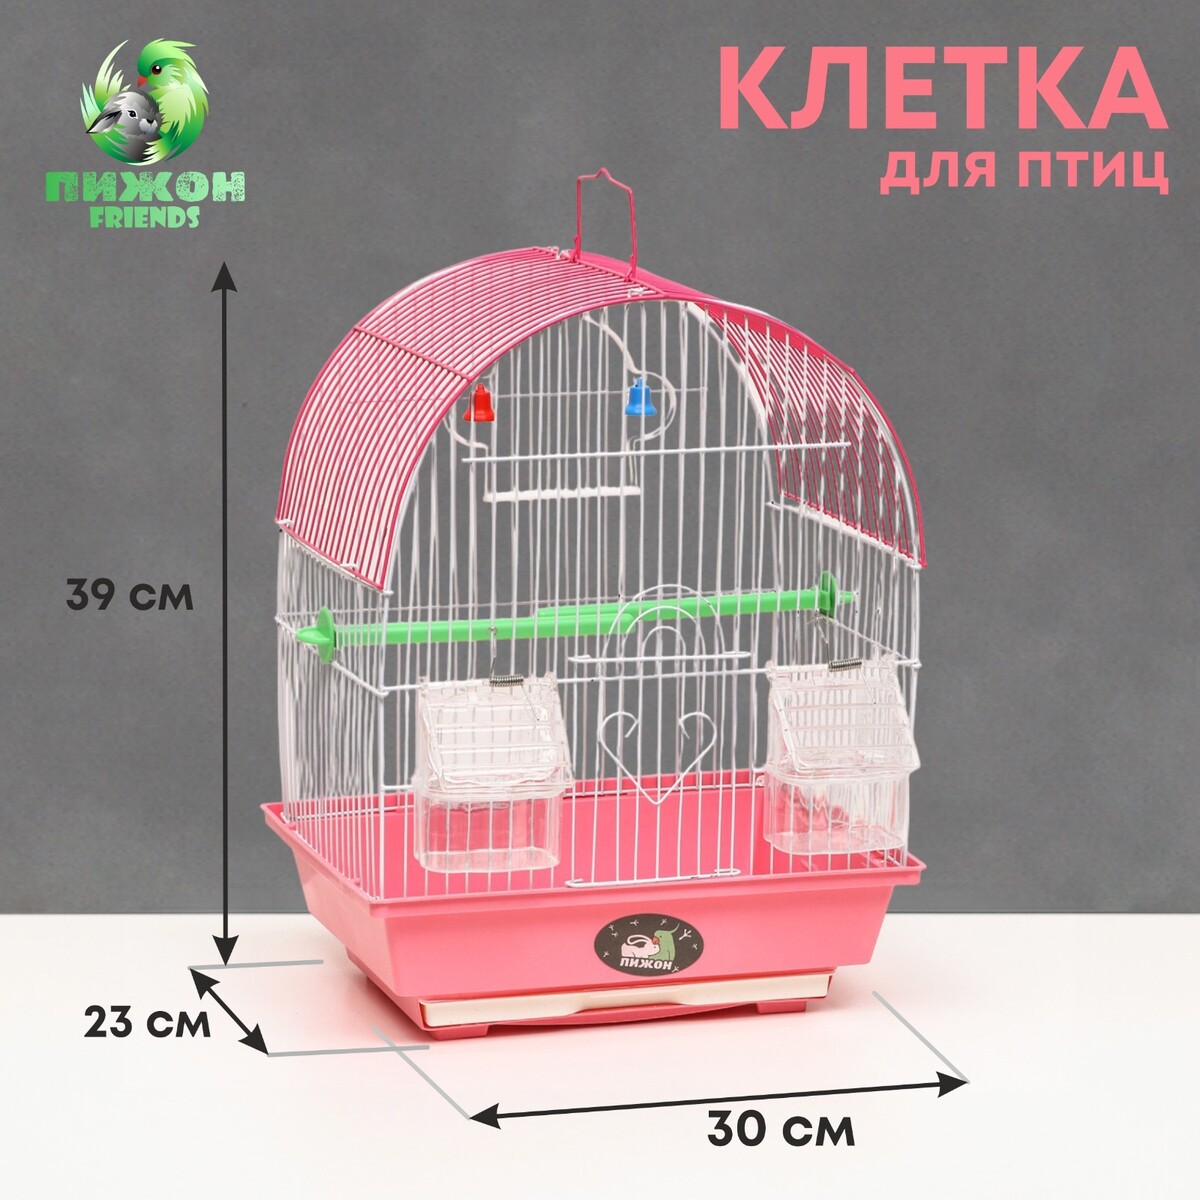 Клетка для птицукомплектованная bd-1/3c, 30 х 23 х 39 см, розовая Пижон